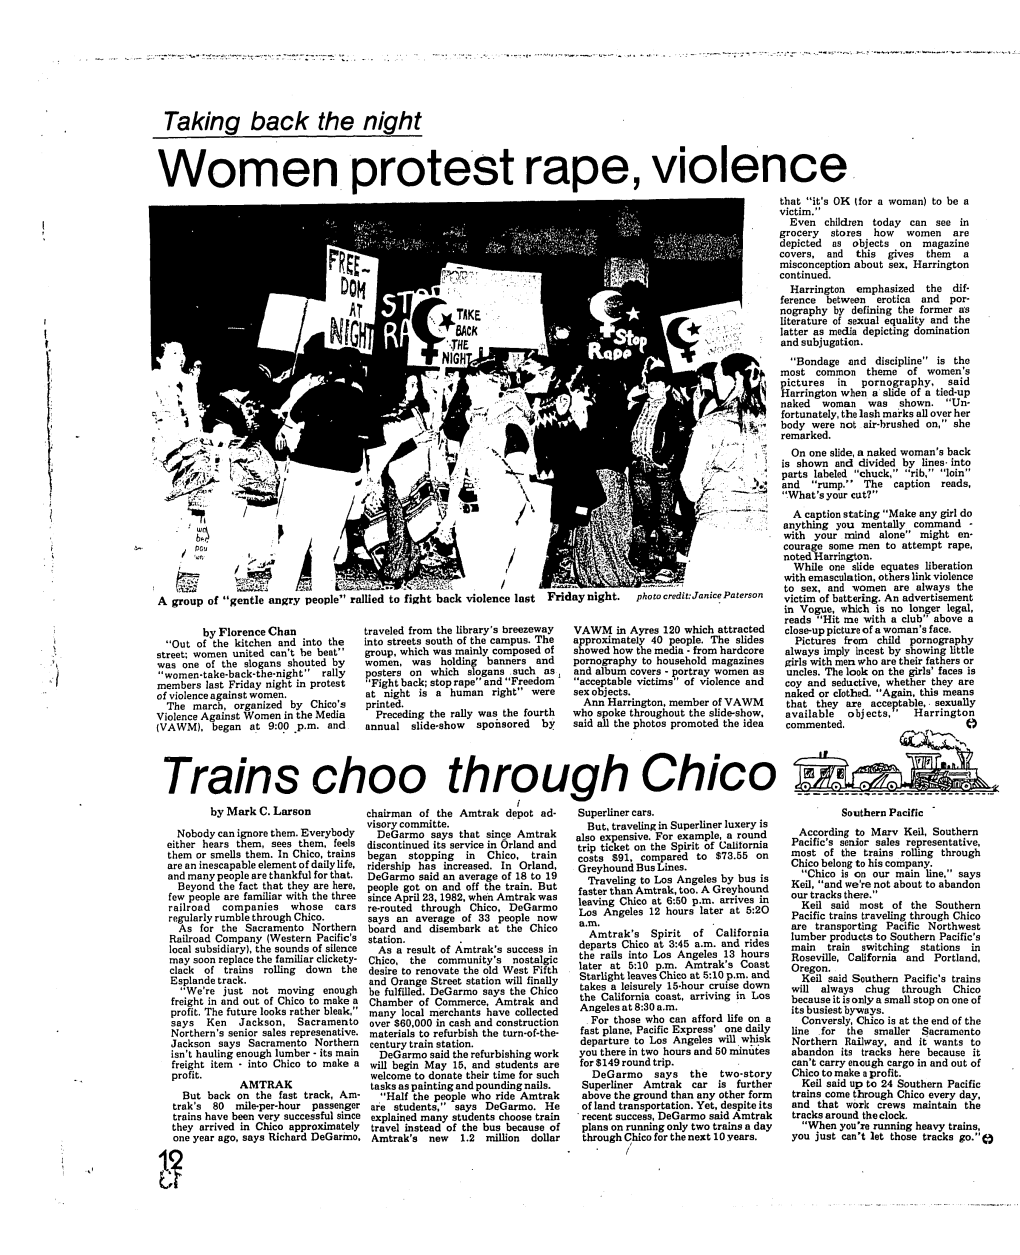 Women Protest Rape, Violence Trains Choo Through Chico